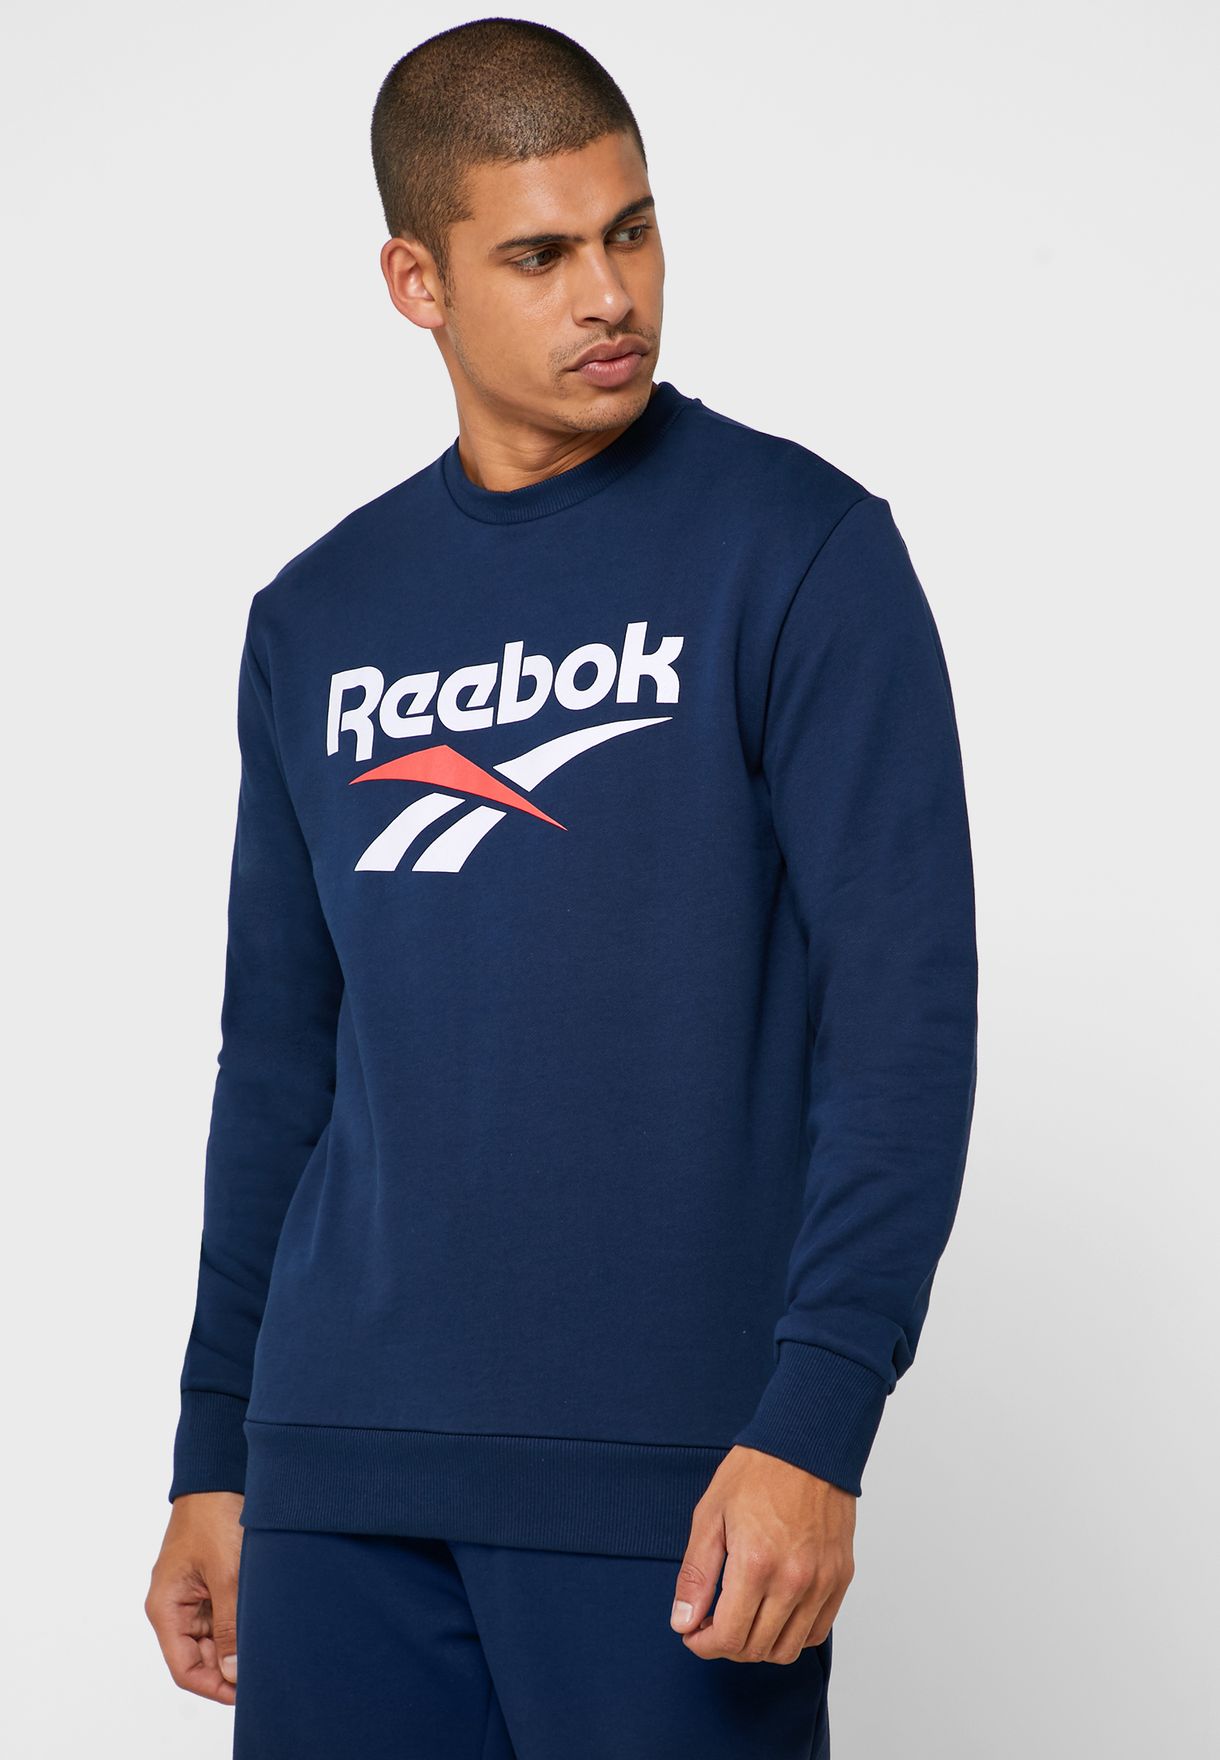 discount reebok clothing